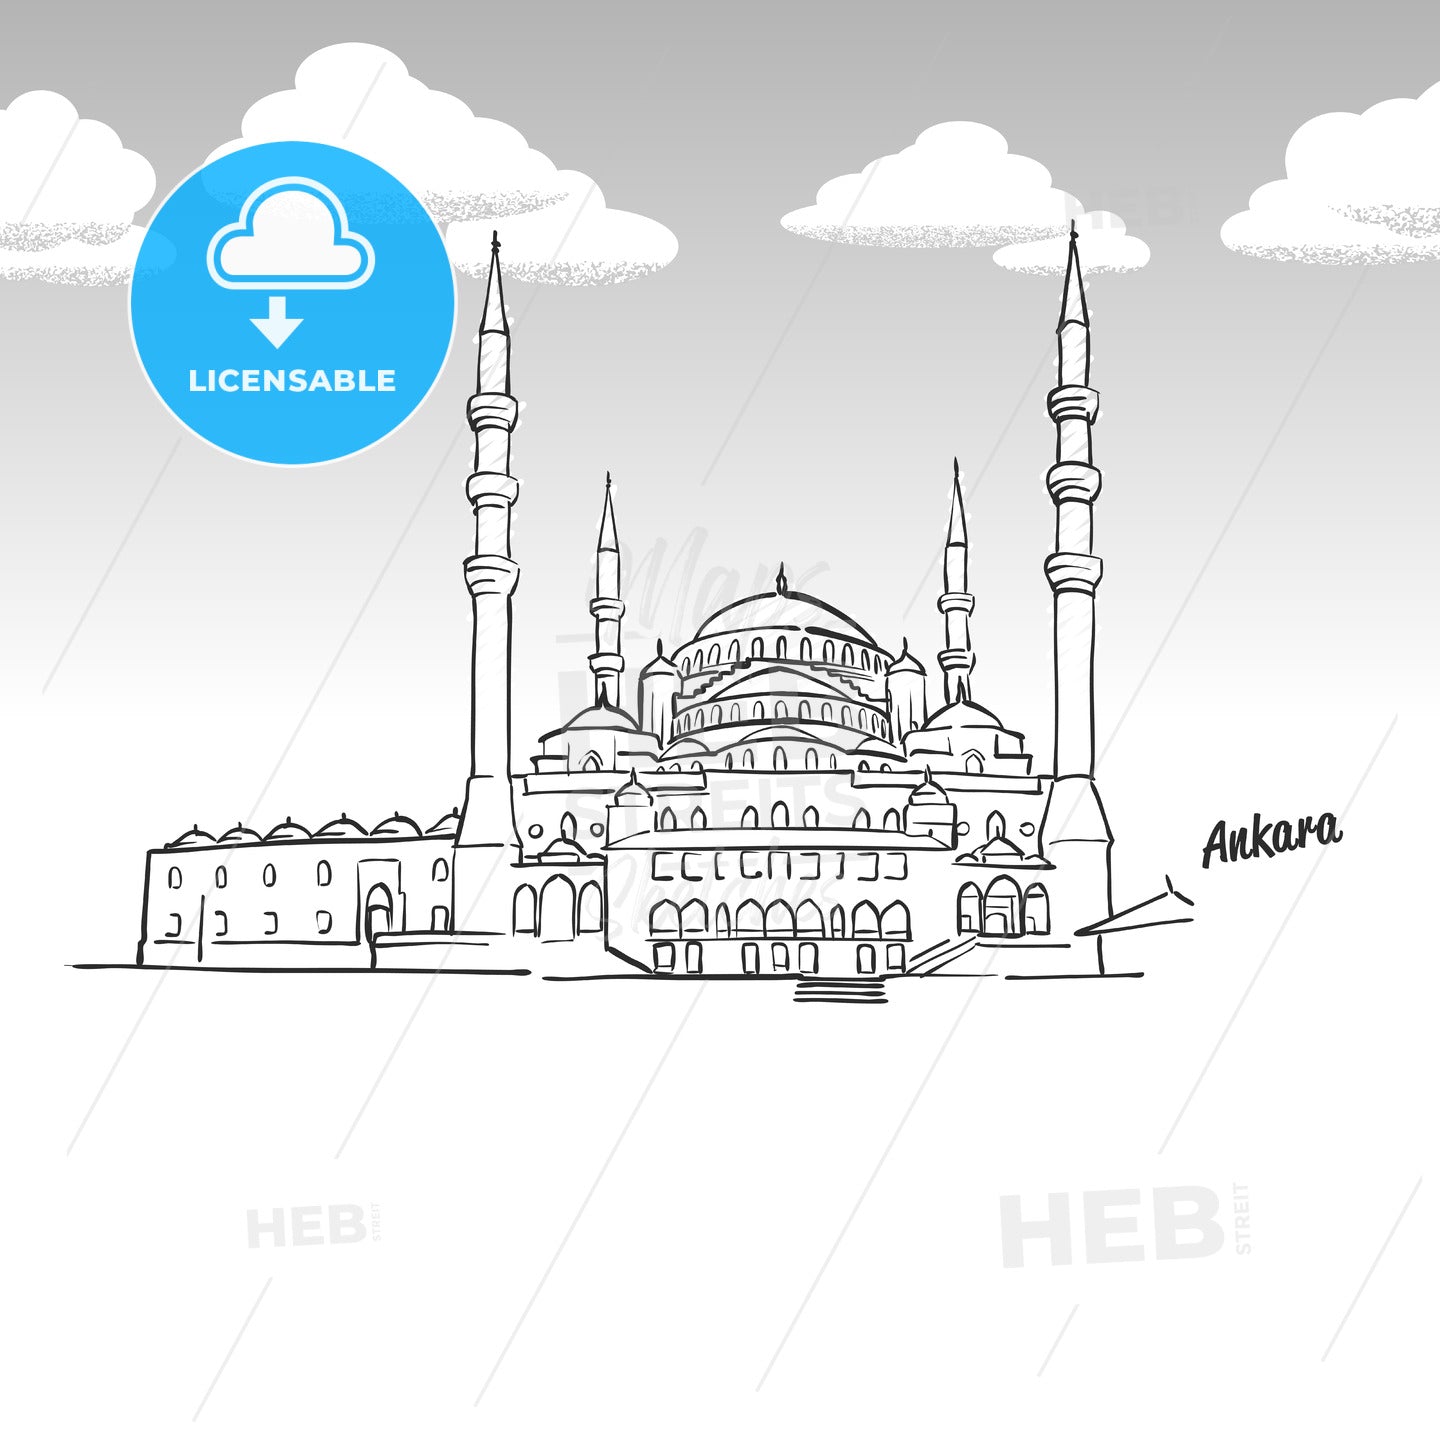 Ankara, Turkey famous landmark sketch – instant download